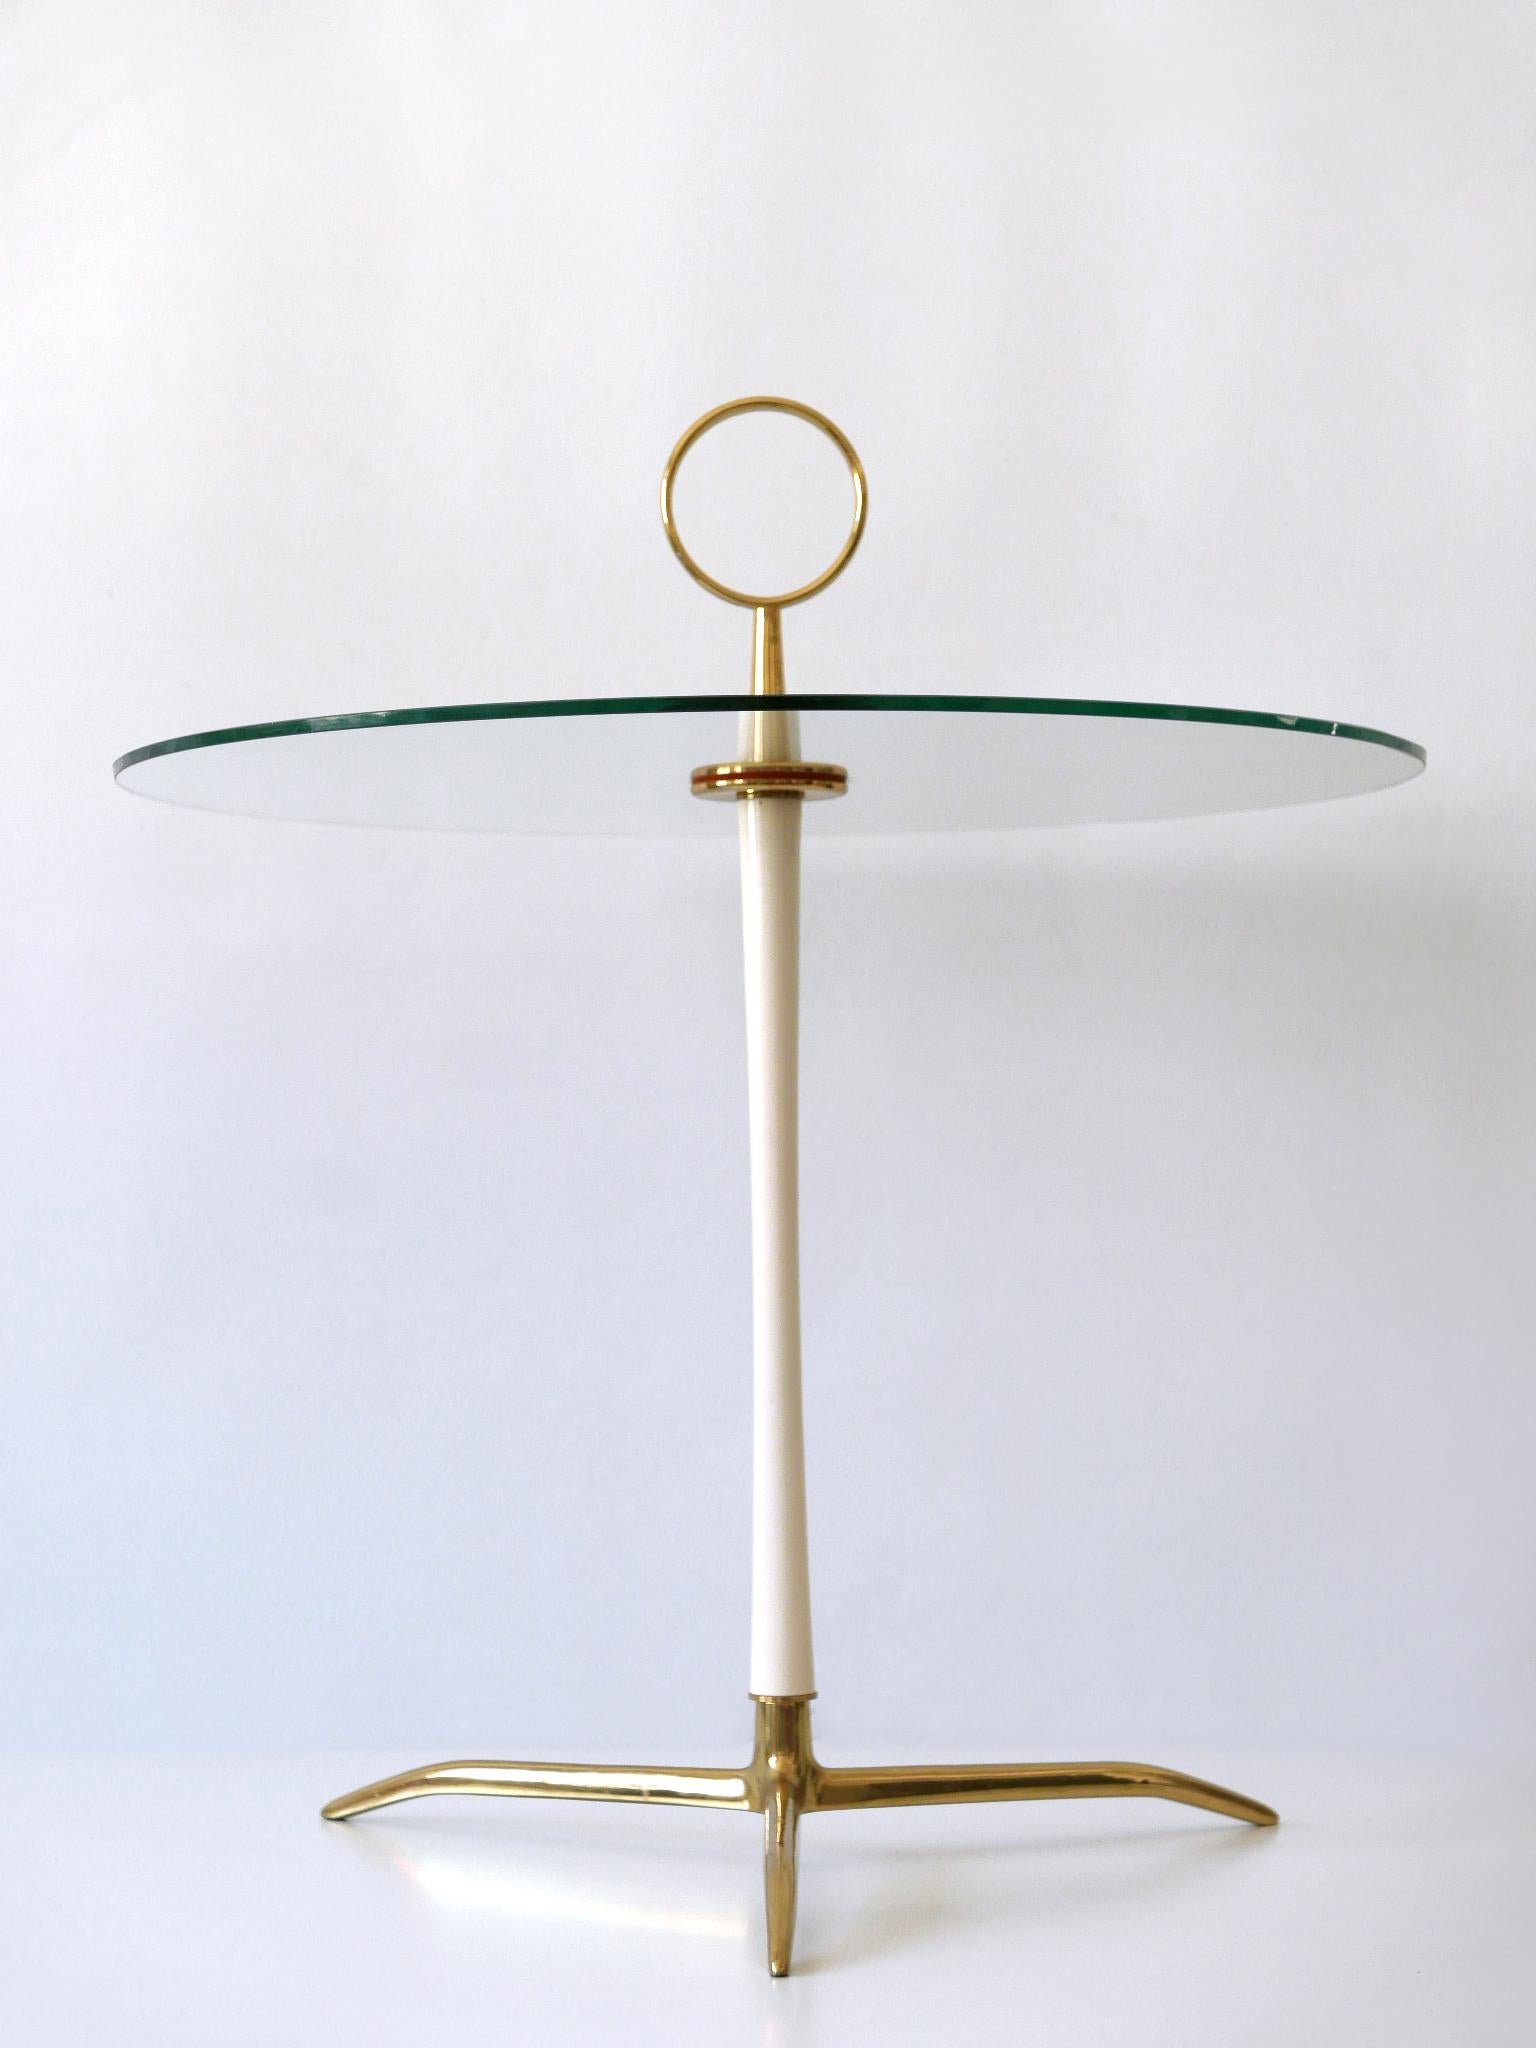 Elegant Mid-Century Modern Side Table by Vereinigte Werkstätten Germany 1950s For Sale 1